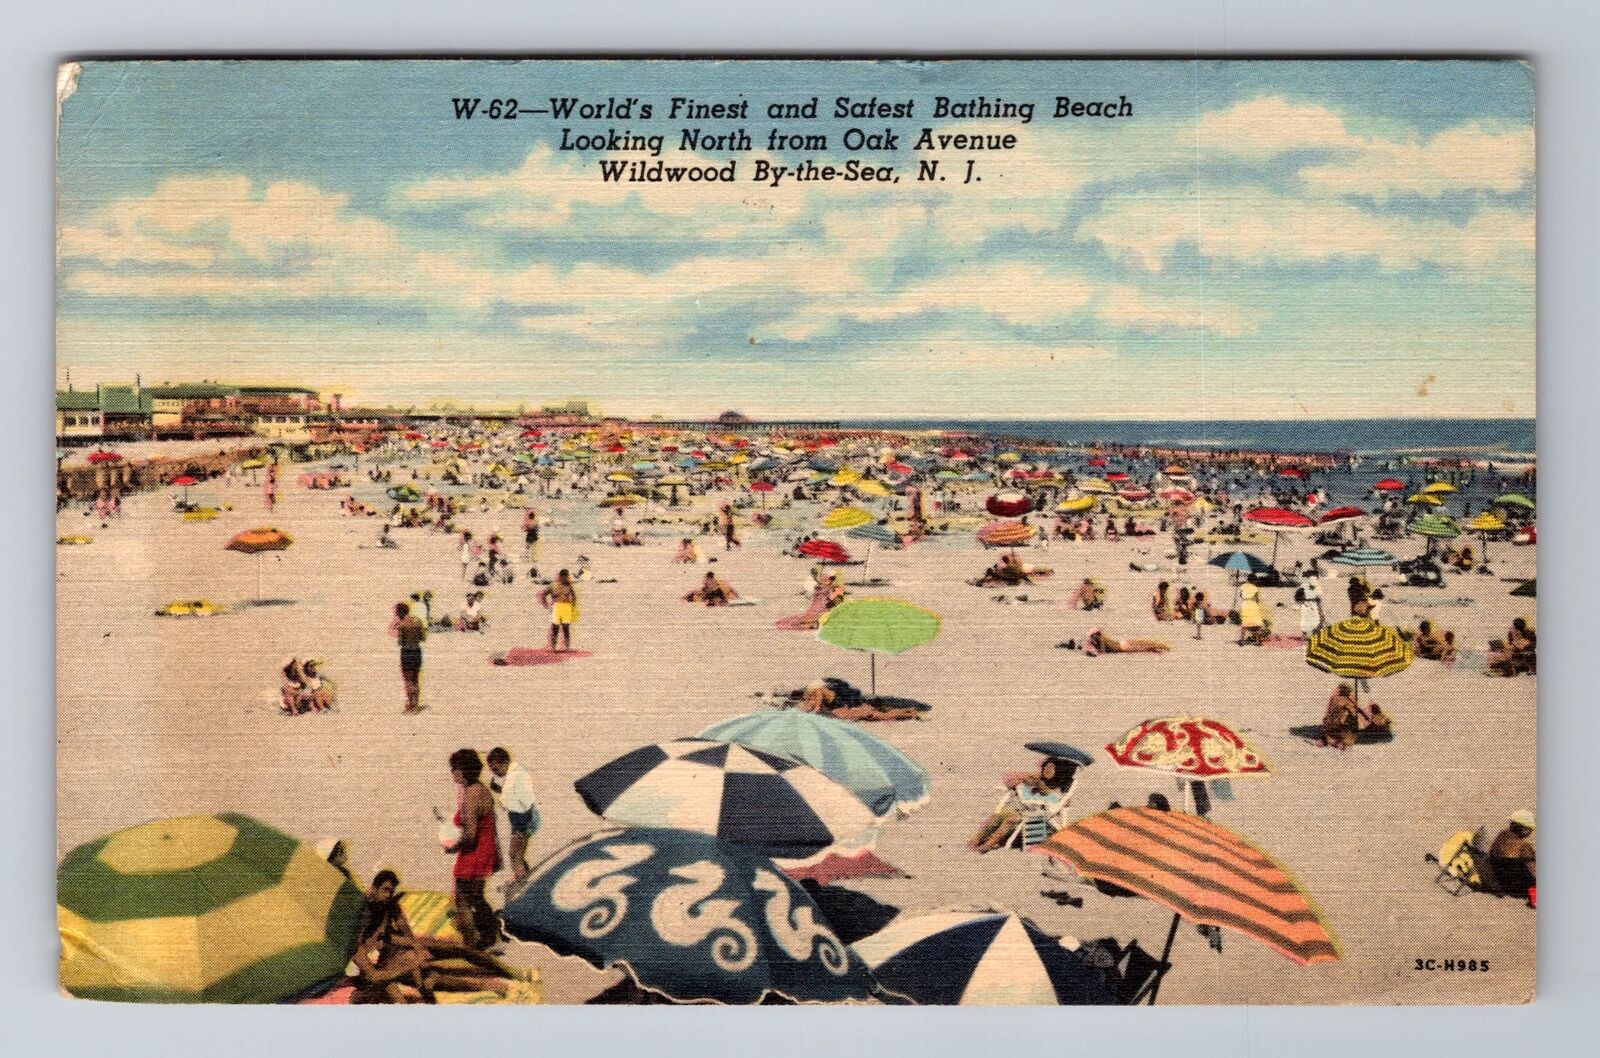 Wildwood-By-The-Sea NJ-New Jersey, Bathing Beach From Oak Ave. Vintage Postcard